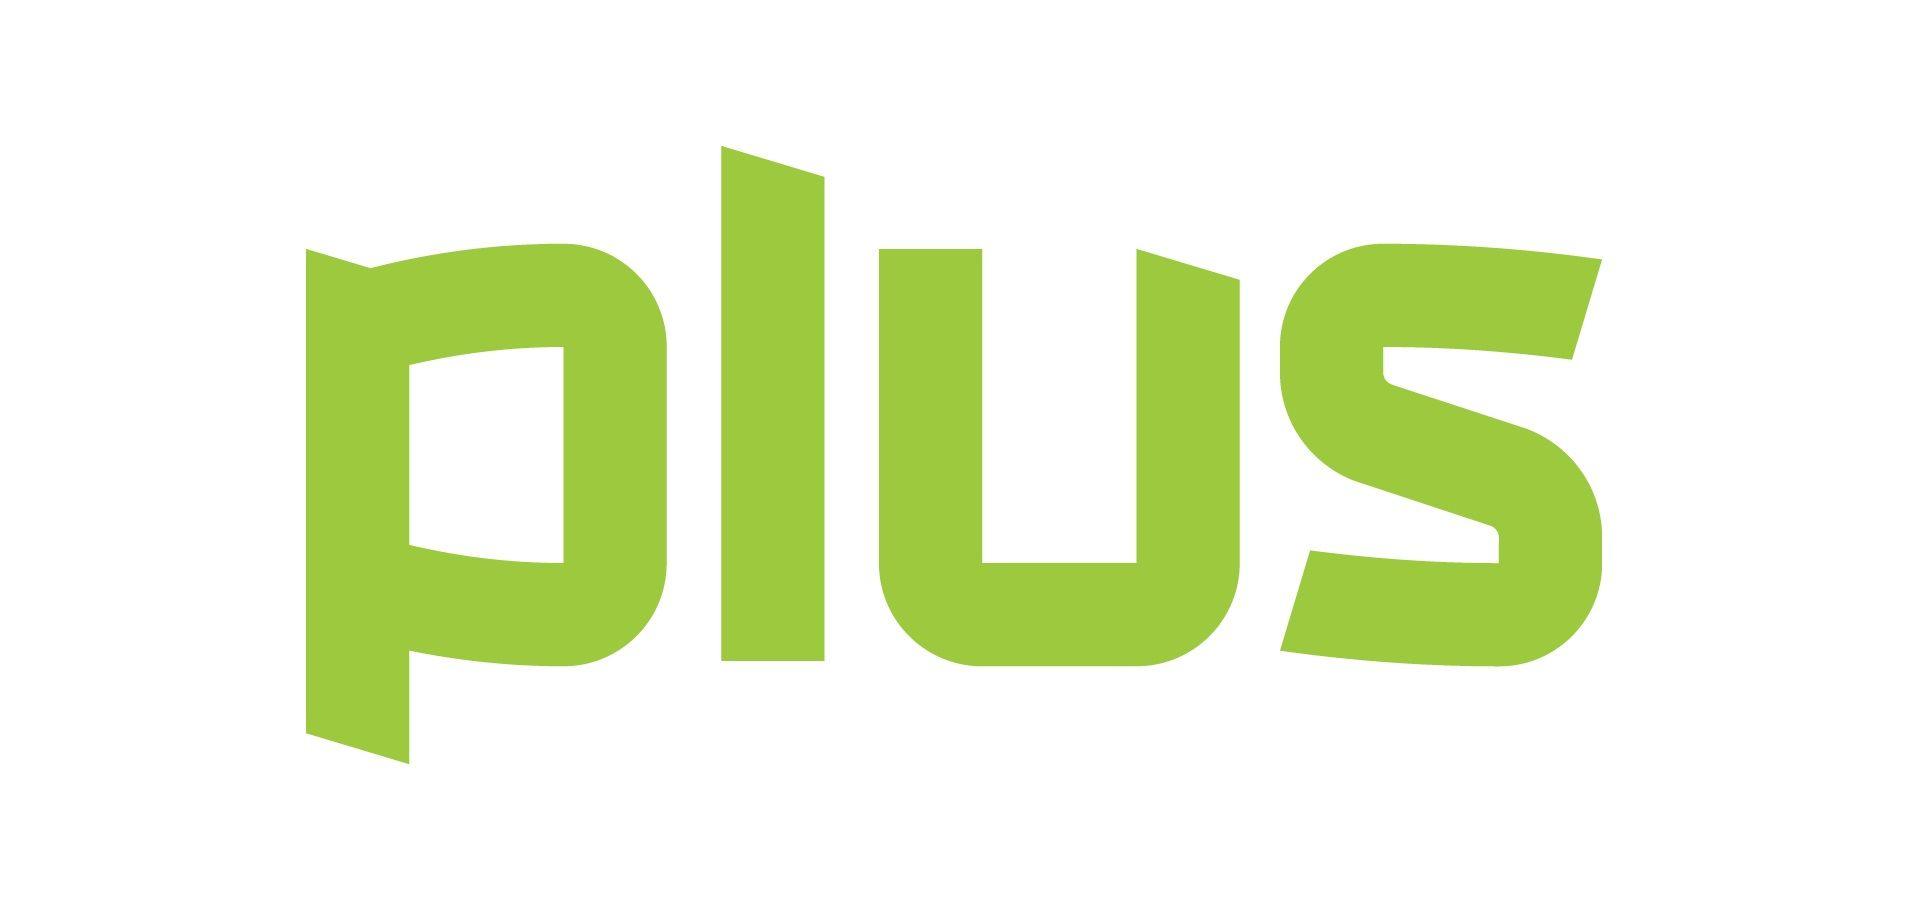 Plus Logo - File:TV JOJ Plus logo.jpg - Wikimedia Commons